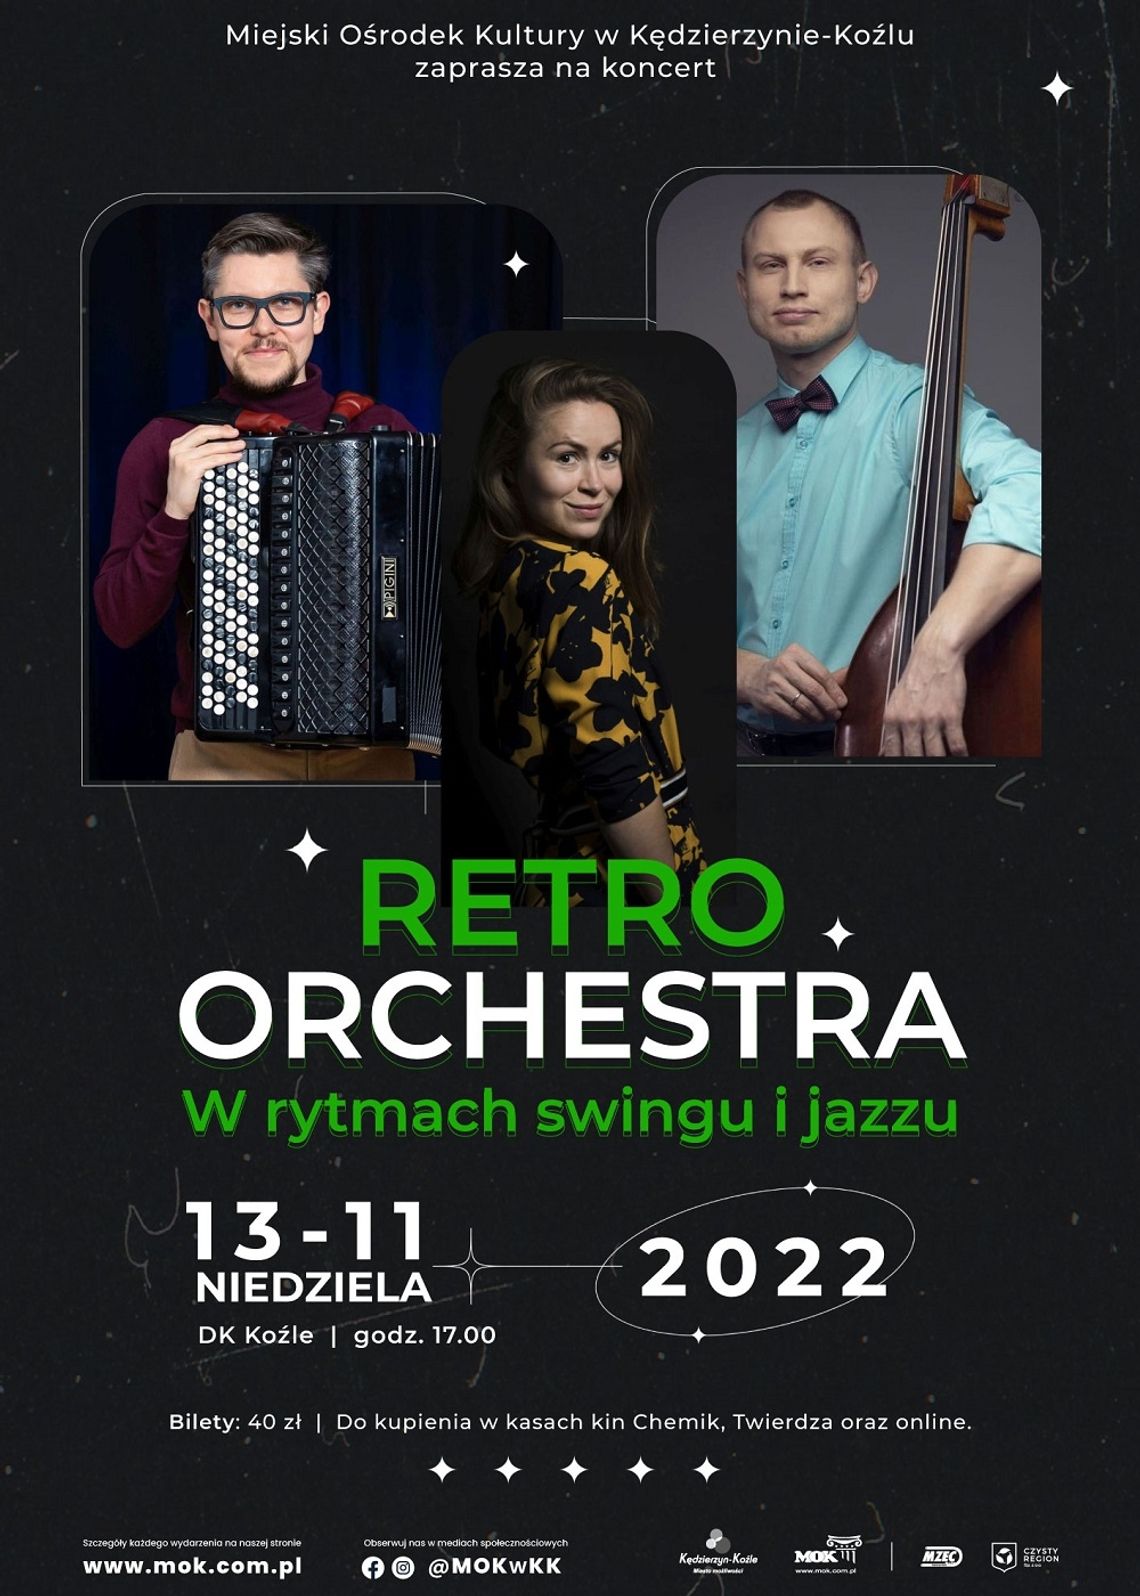 Koncert Retro Orchestra "W rytmach swingu i jazzu"